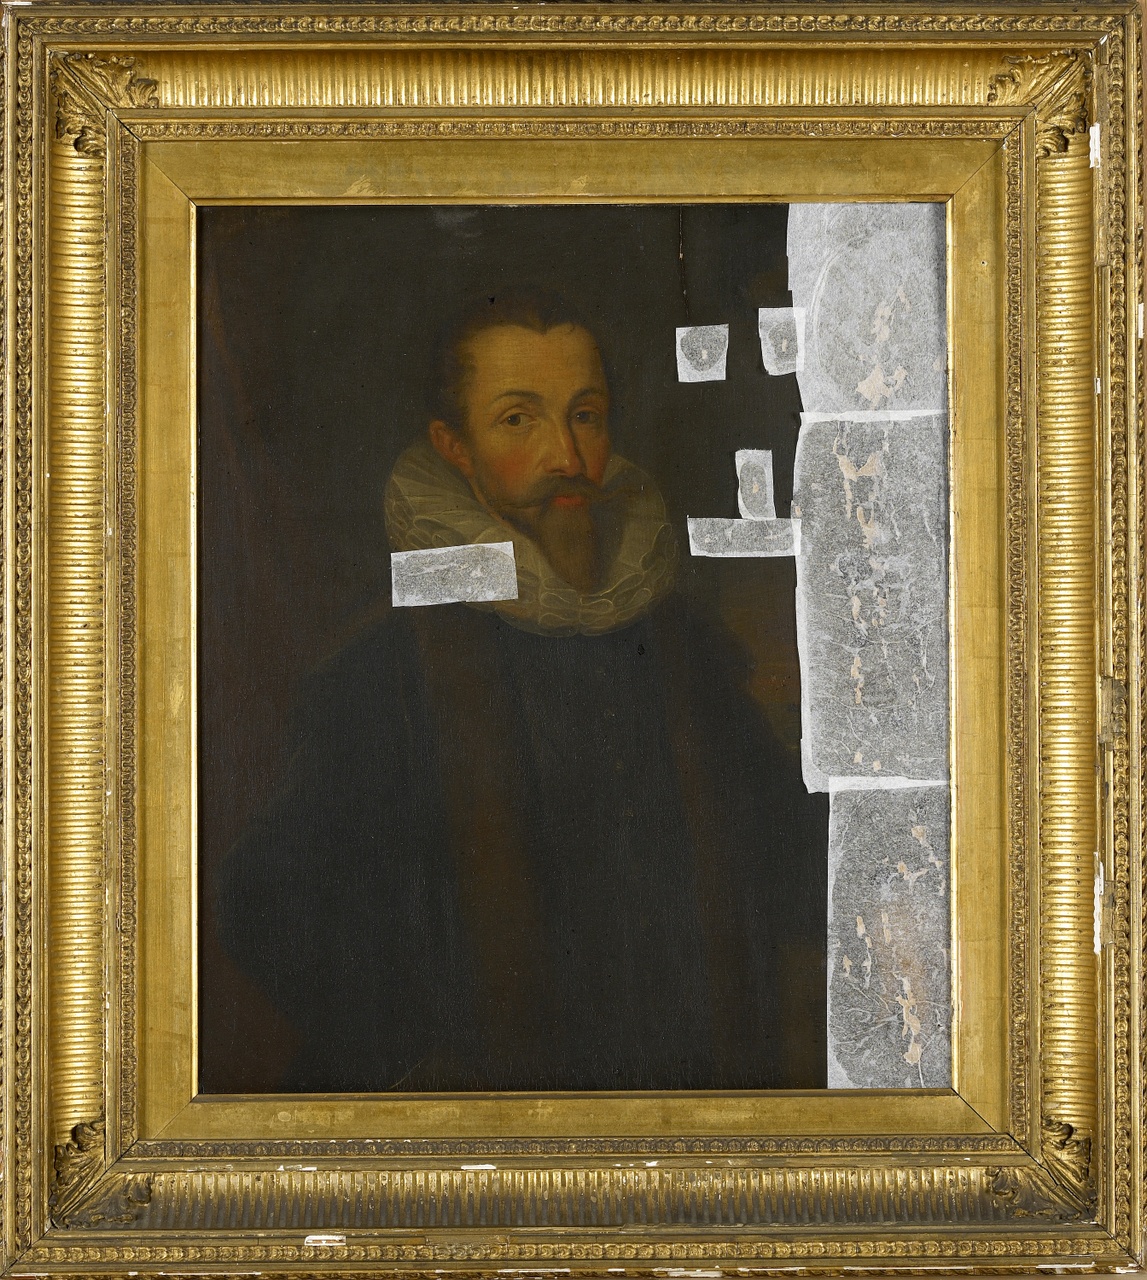 Aernout van Citters (1561-1634), Willem Stad